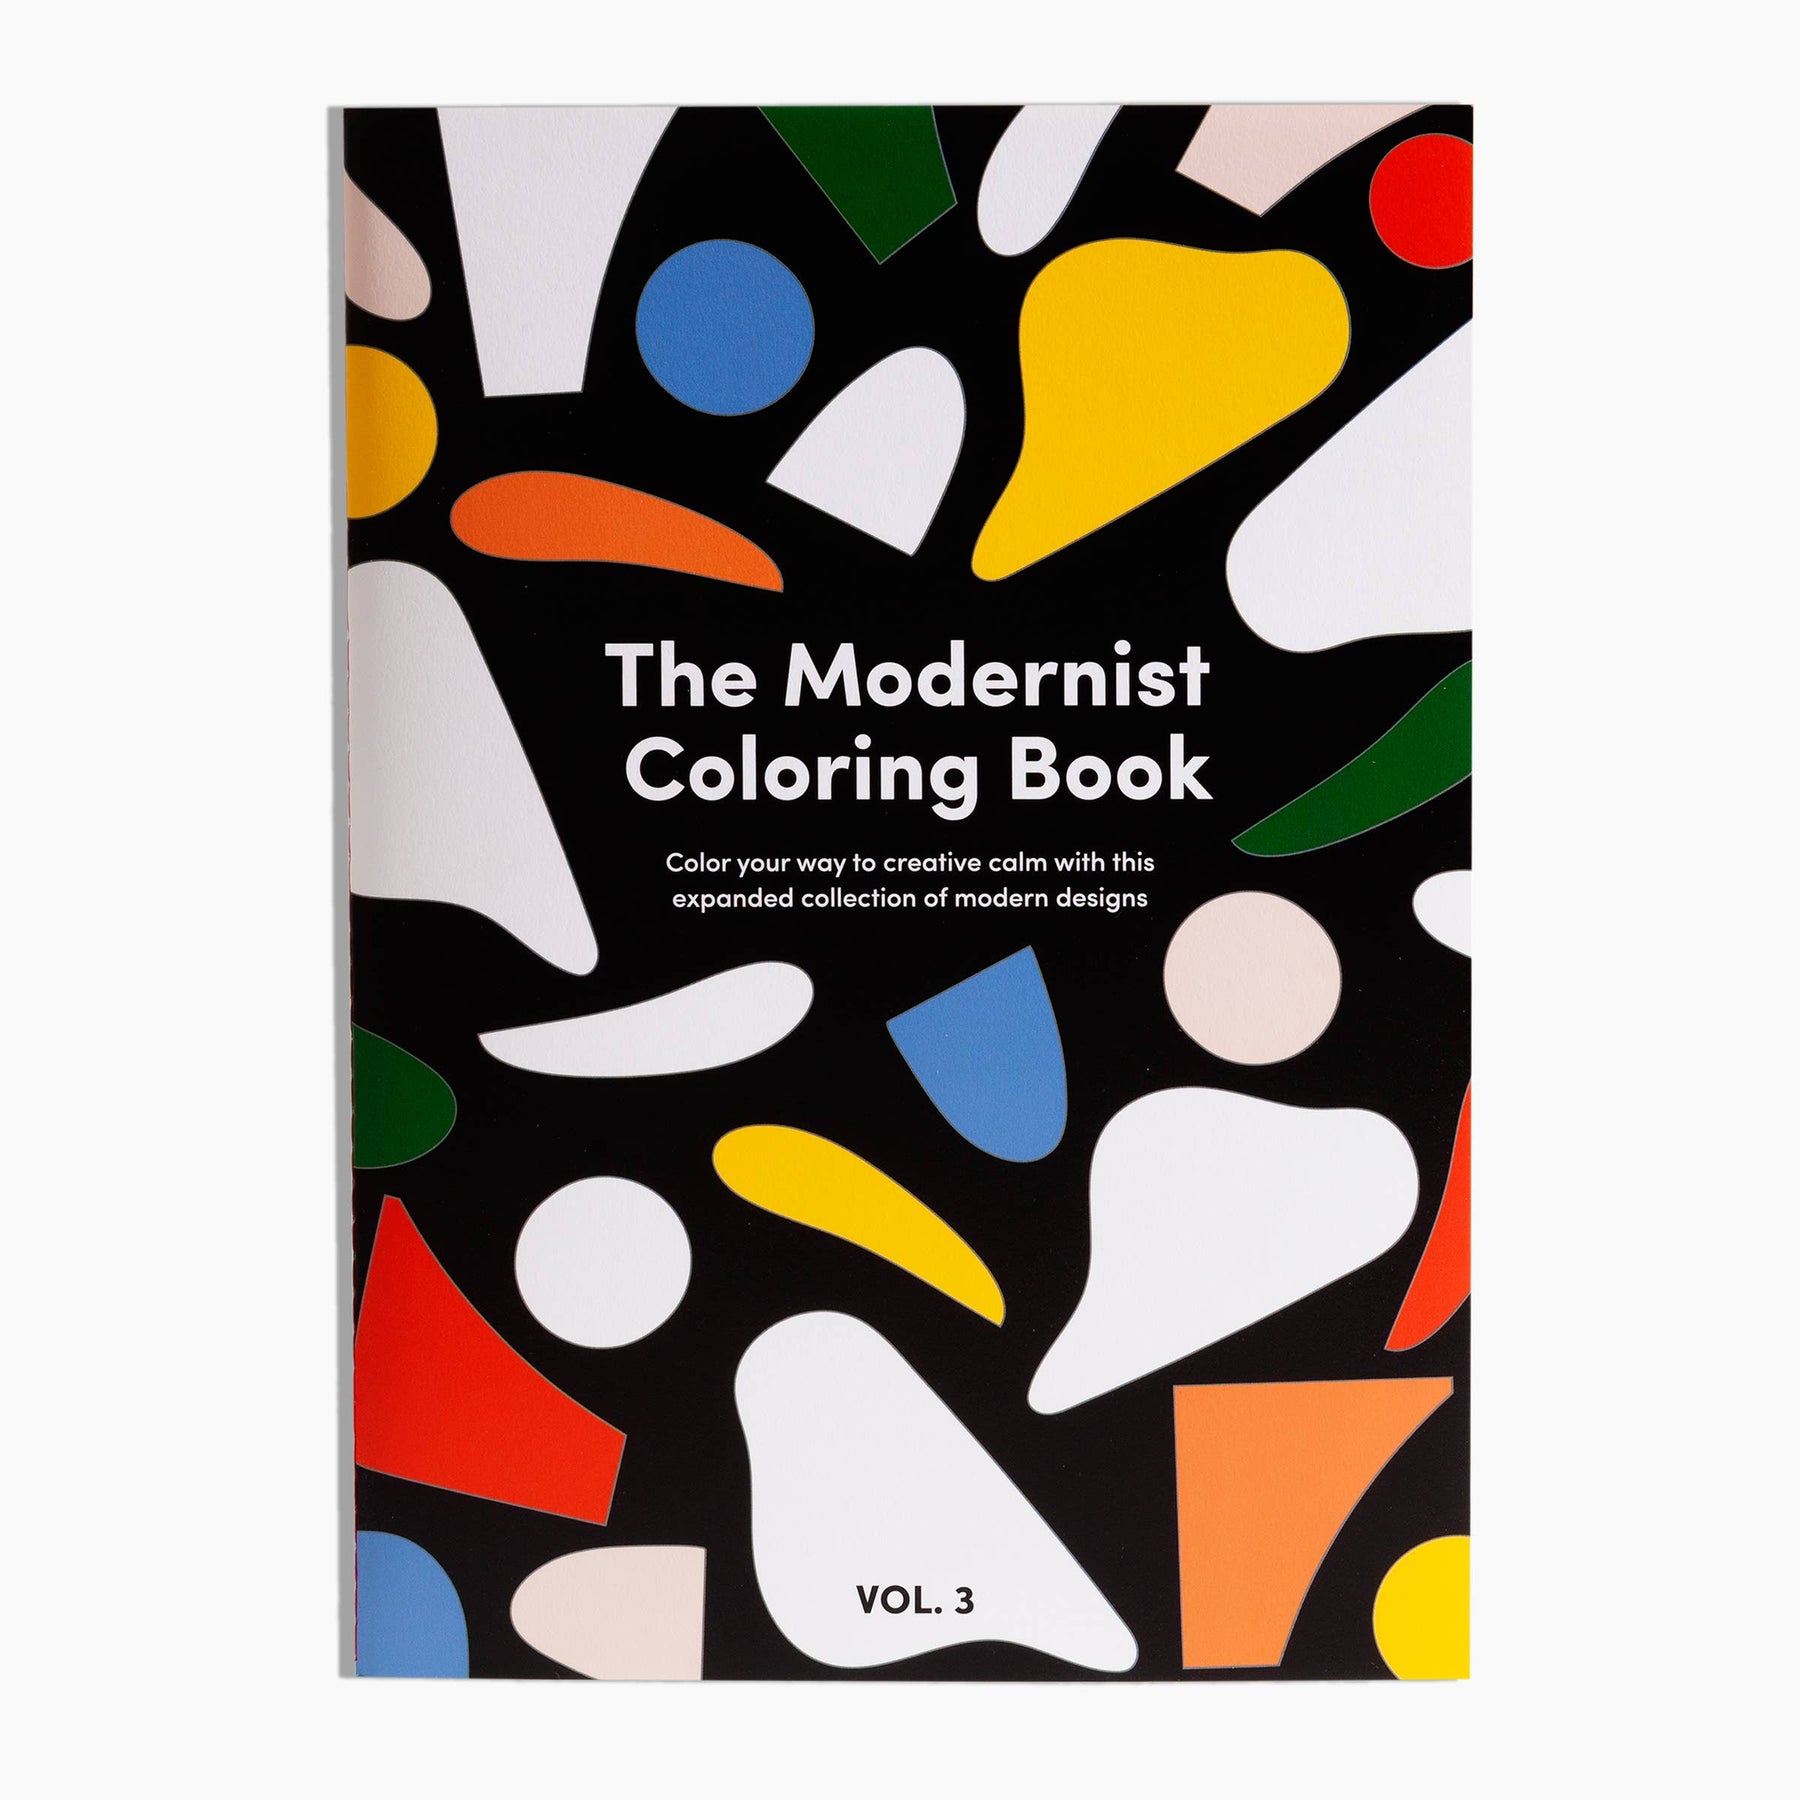 Modernist Coloring Book Vol. 3